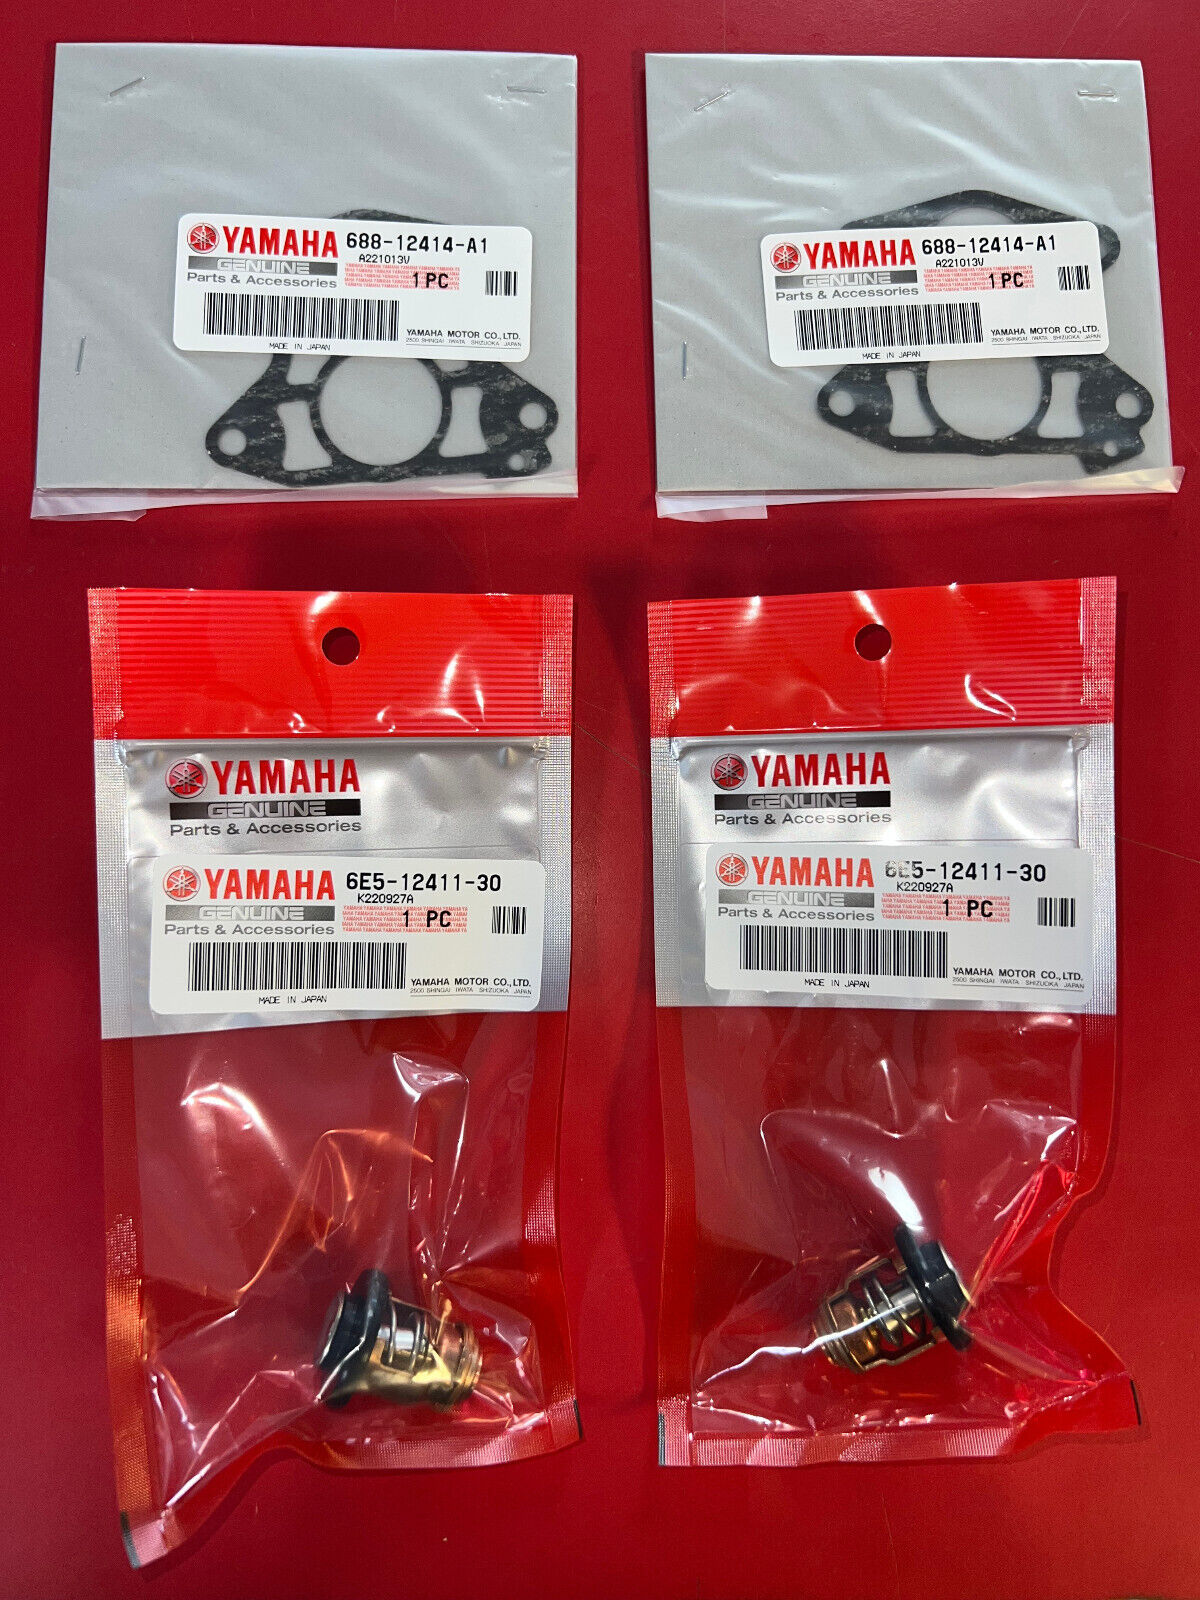 2X Yamaha OEM Outboard Thermostat 6E5-12411-30-00 & Gasket 688-12414-A1-00 Set